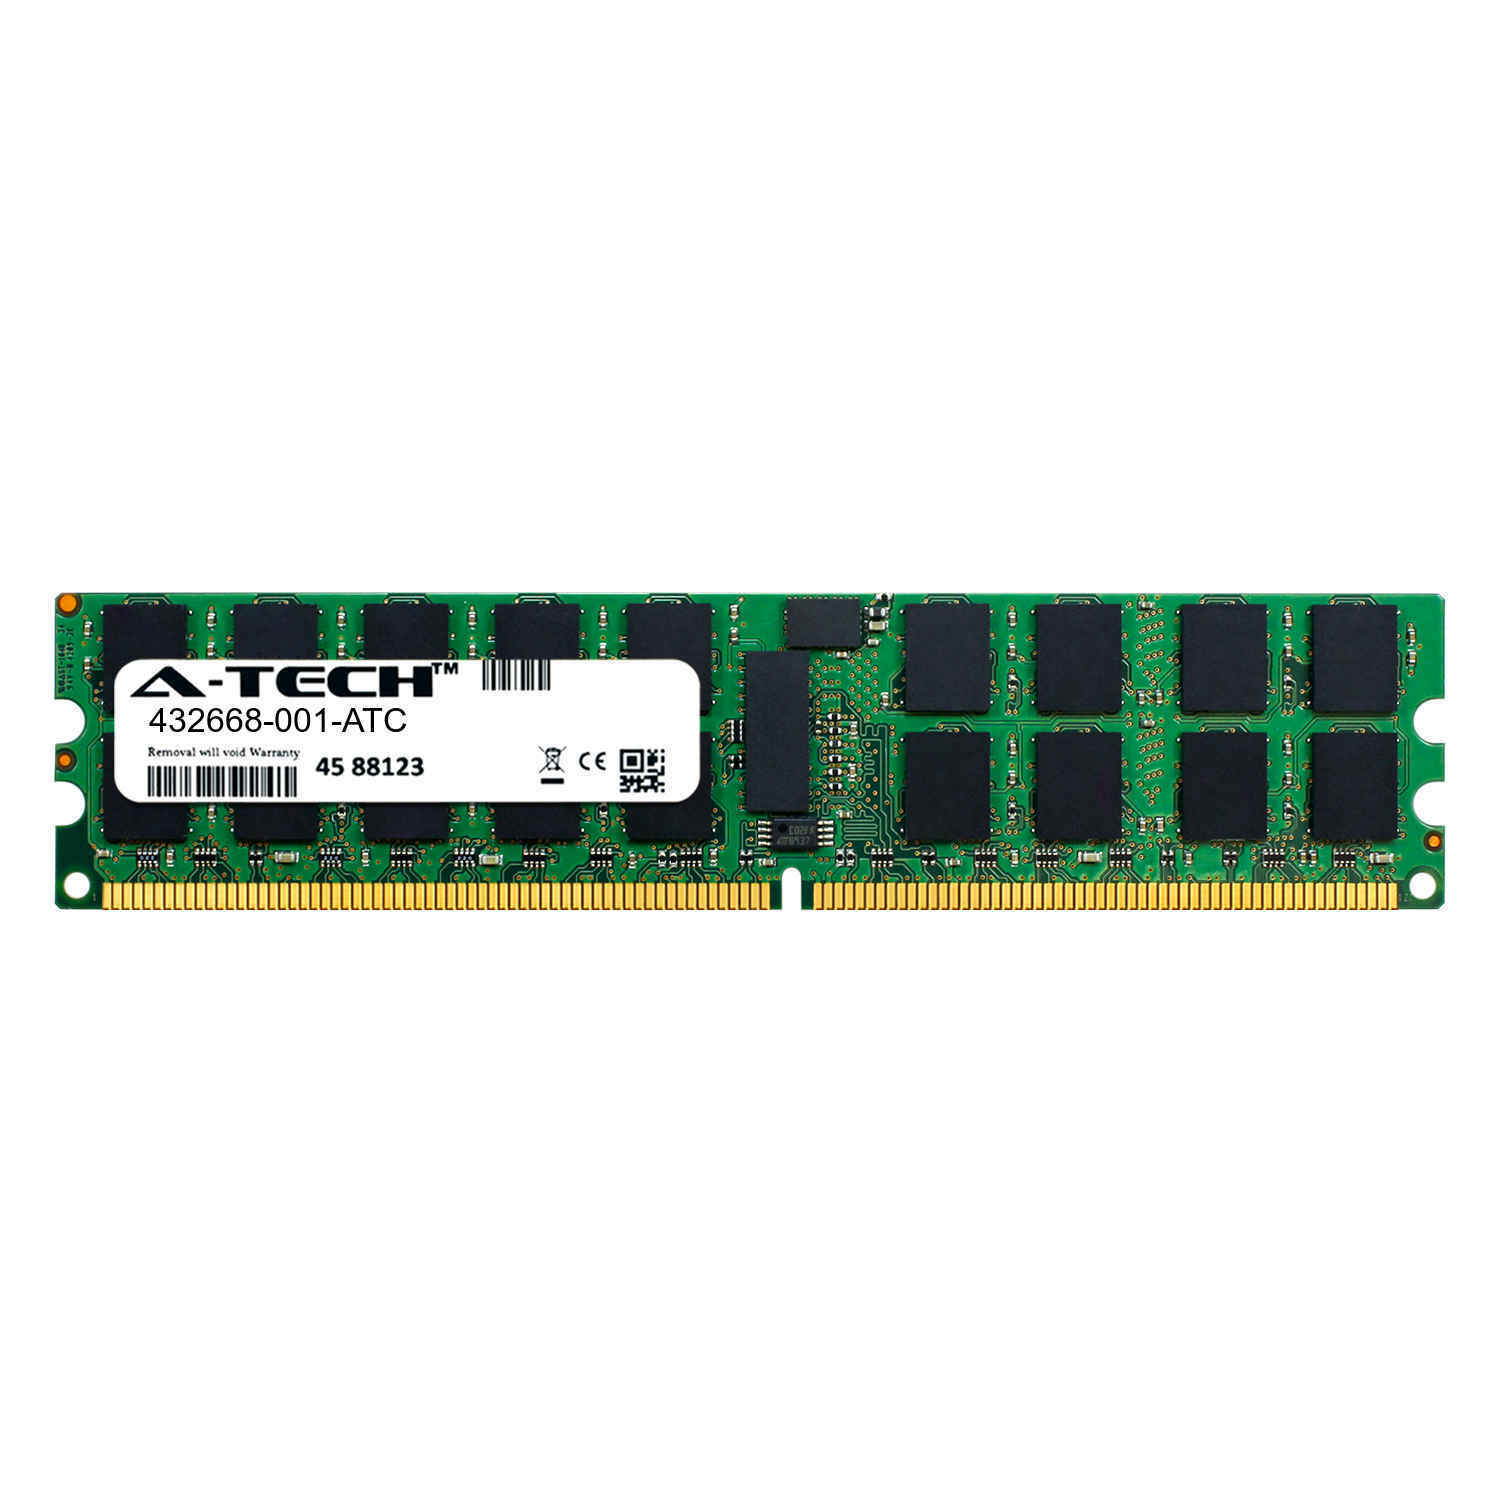 2GB DDR2 PC2-5300R 667MHz RDIMM (HP 432668-001 Equivalent) Server Memory RAM